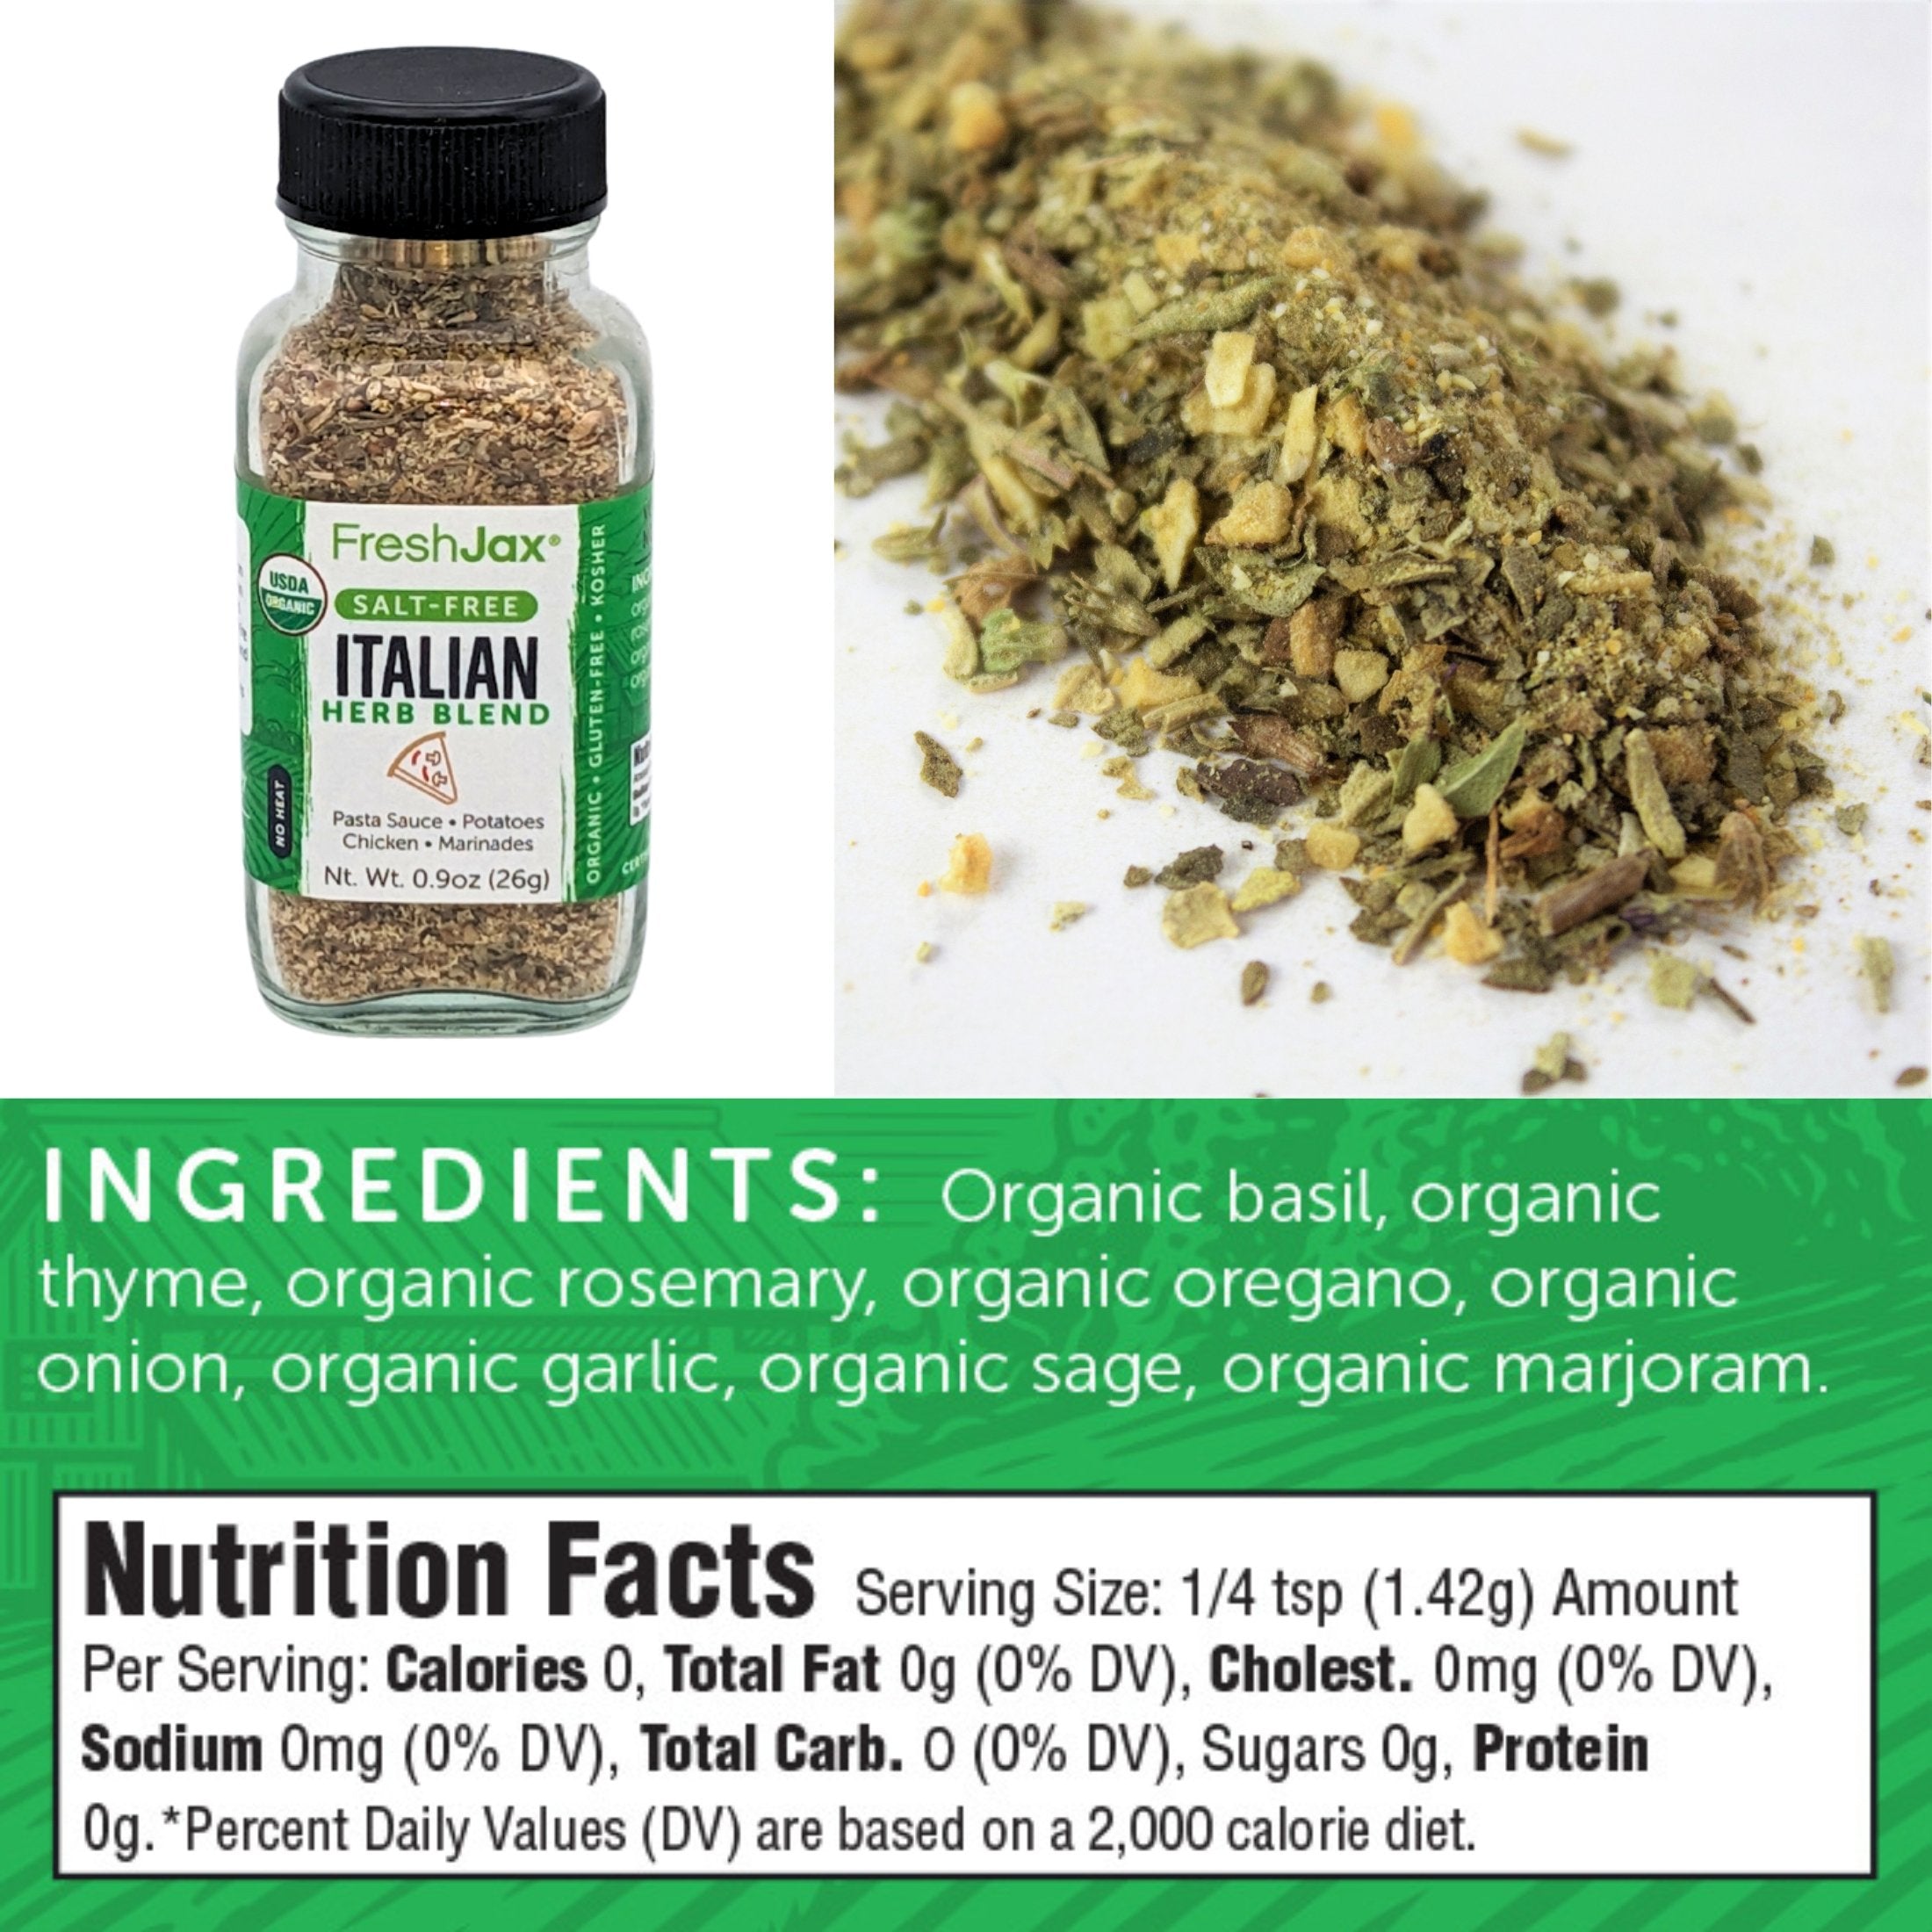 FreshJax Organic Spices Salt-Free Italian Herb Blend Ingredient and Nutritional Information